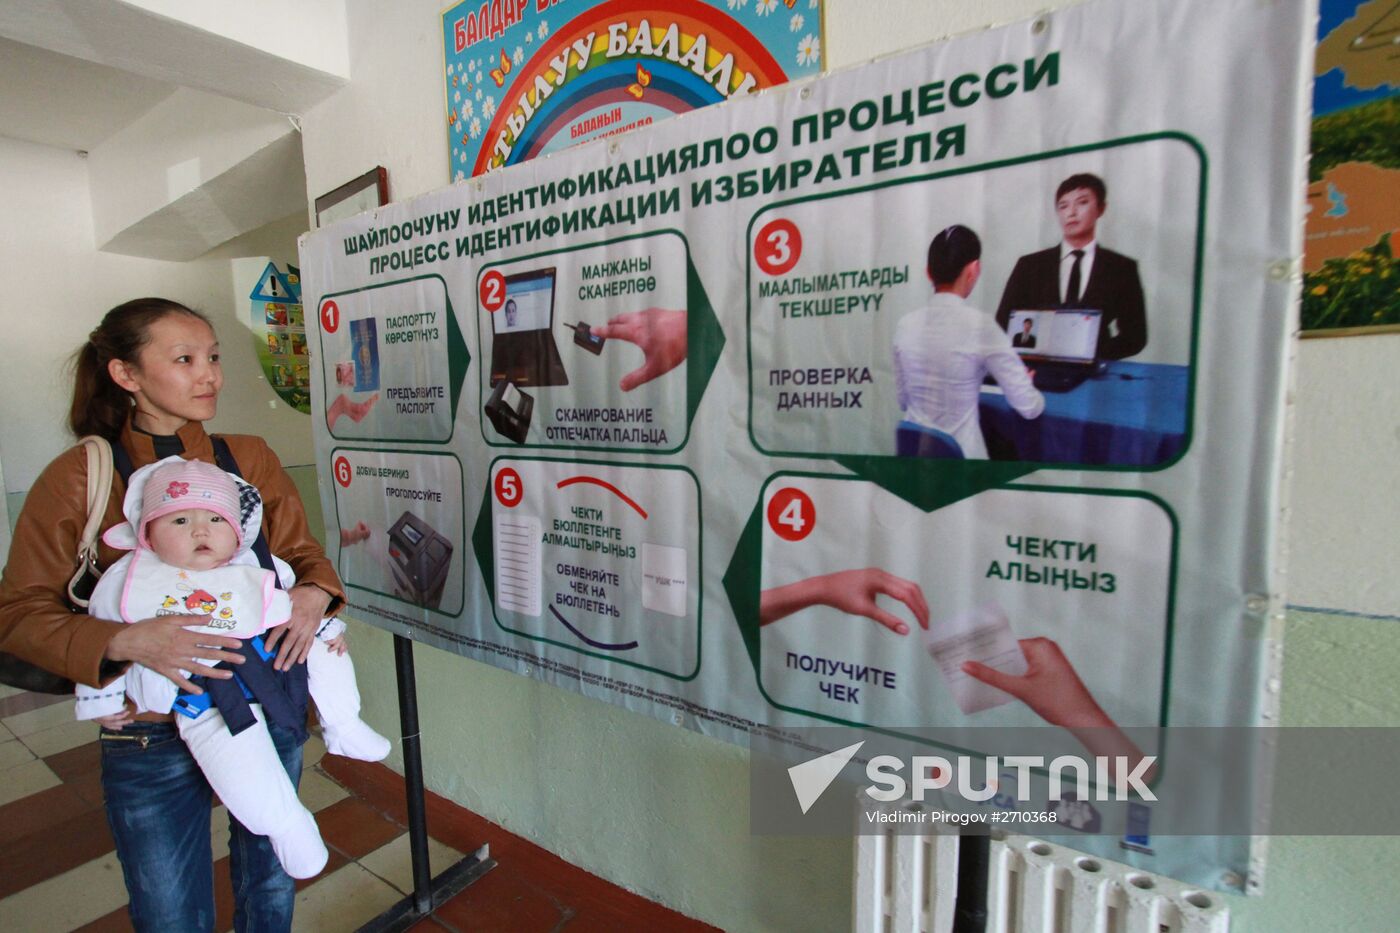 Preparation underway for parliamentary election in Kyrgyzstan